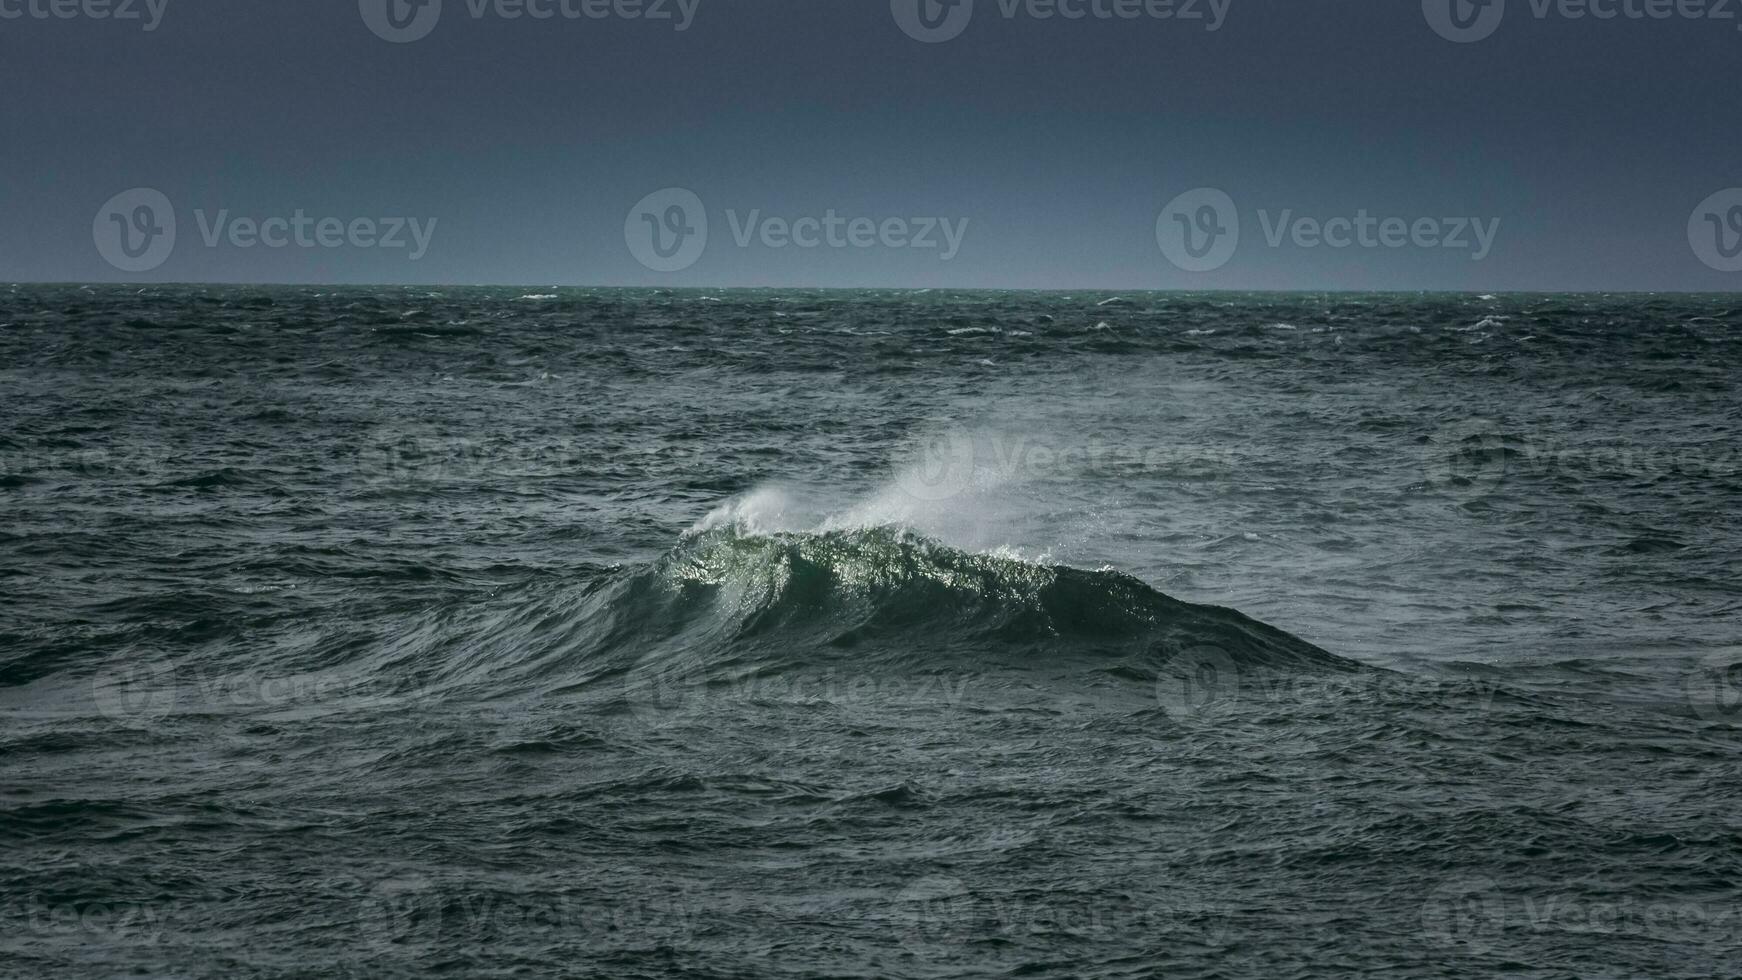 Waves in the ocean, Patagonia photo